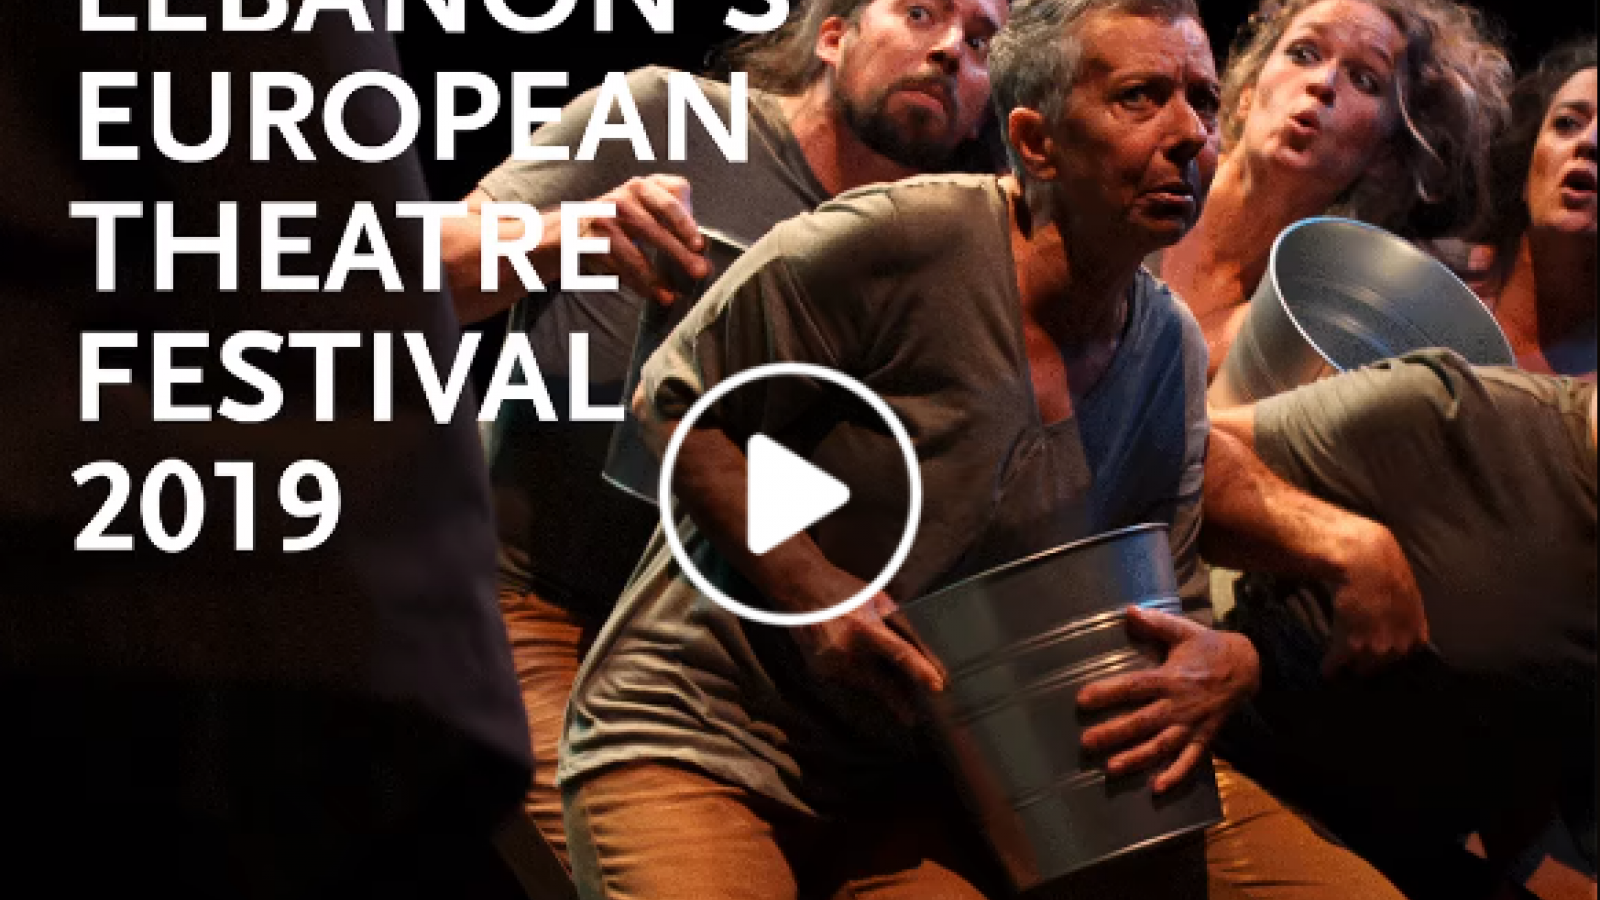 Lebanon’s European Theatre Festival: Sept 27 To Oct 12